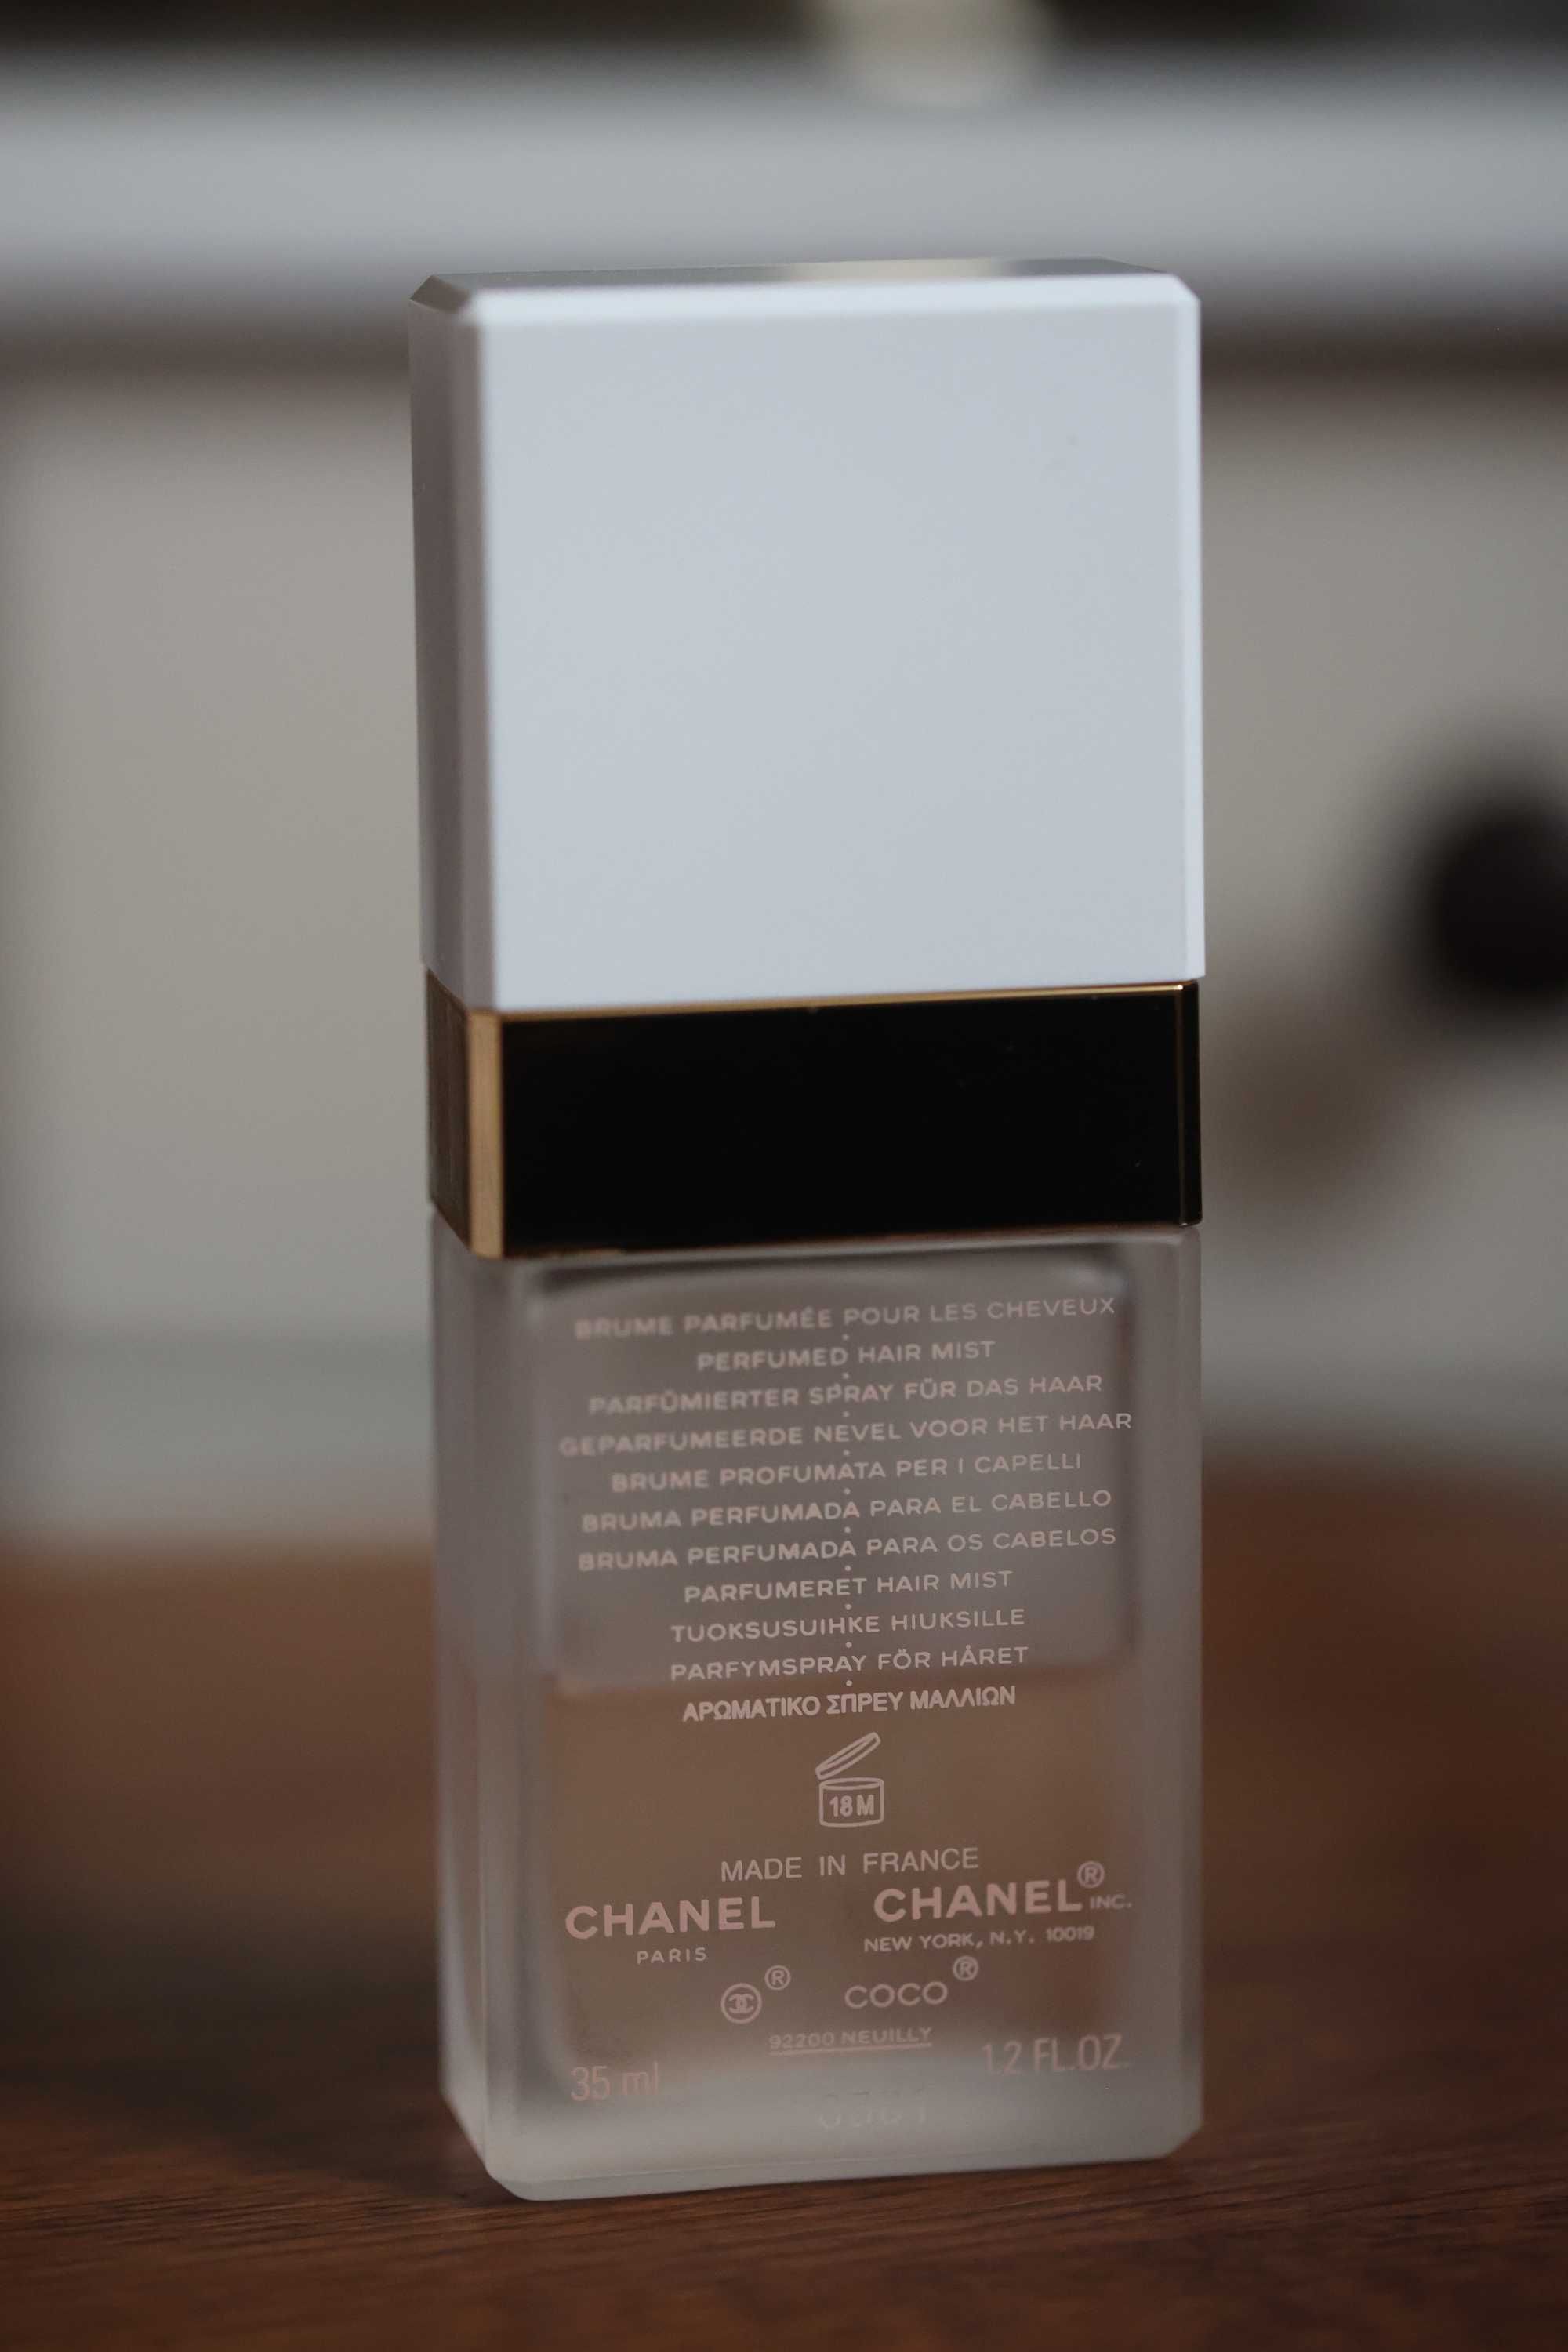 Parfum Chanel Coco Mademoiselle Hair Mist, 35 ml